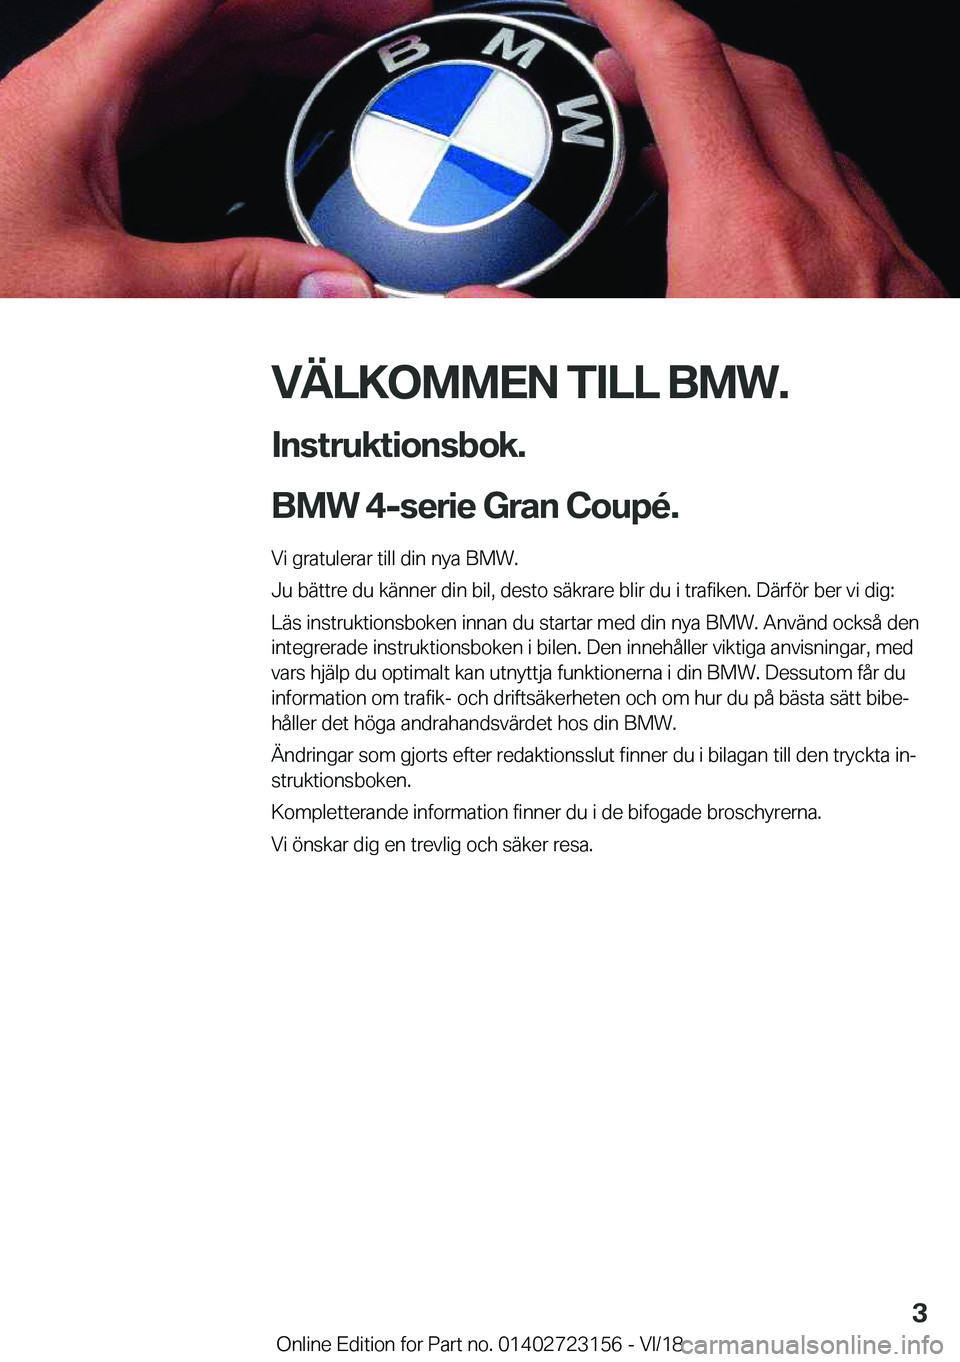 BMW 4 SERIES GRAN COUPE 2019  InstruktionsbÖcker (in Swedish) �V�Ä�L�K�O�M�M�E�N��T�I�L�L��B�M�W�.�I�n�s�t�r�u�k�t�i�o�n�s�b�o�k�.
�B�M�W��4�-�s�e�r�i�e��G�r�a�n��C�o�u�p�